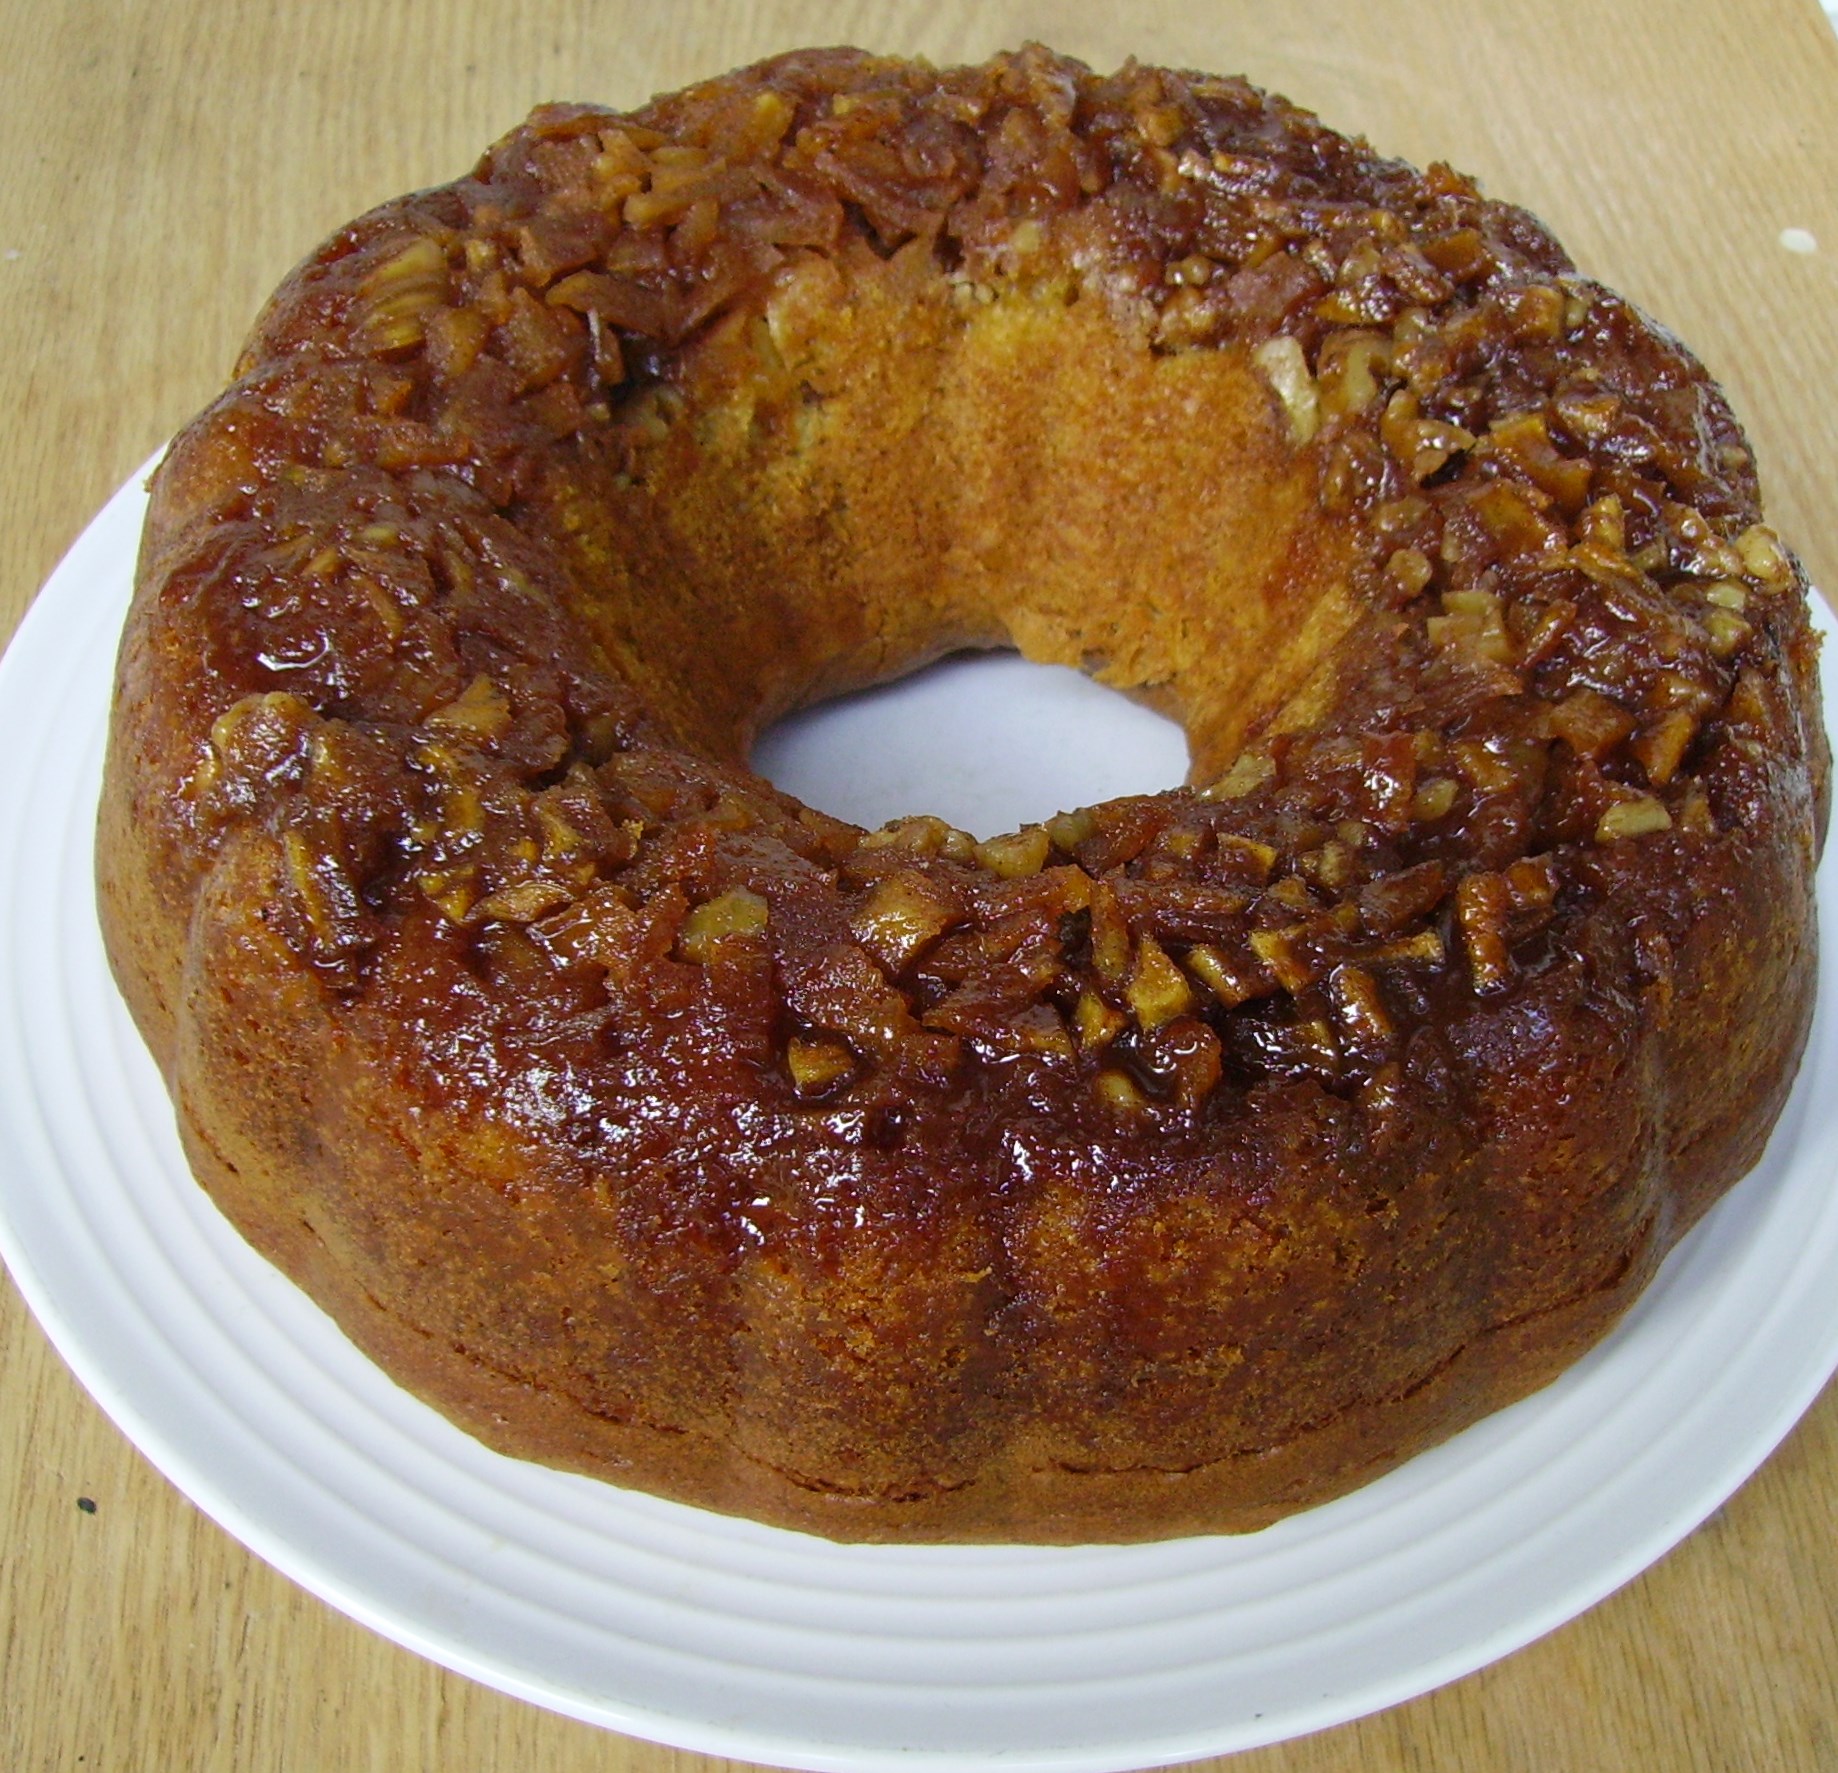 Cinnamon Crown Bundt Cake for #BundtAMonth